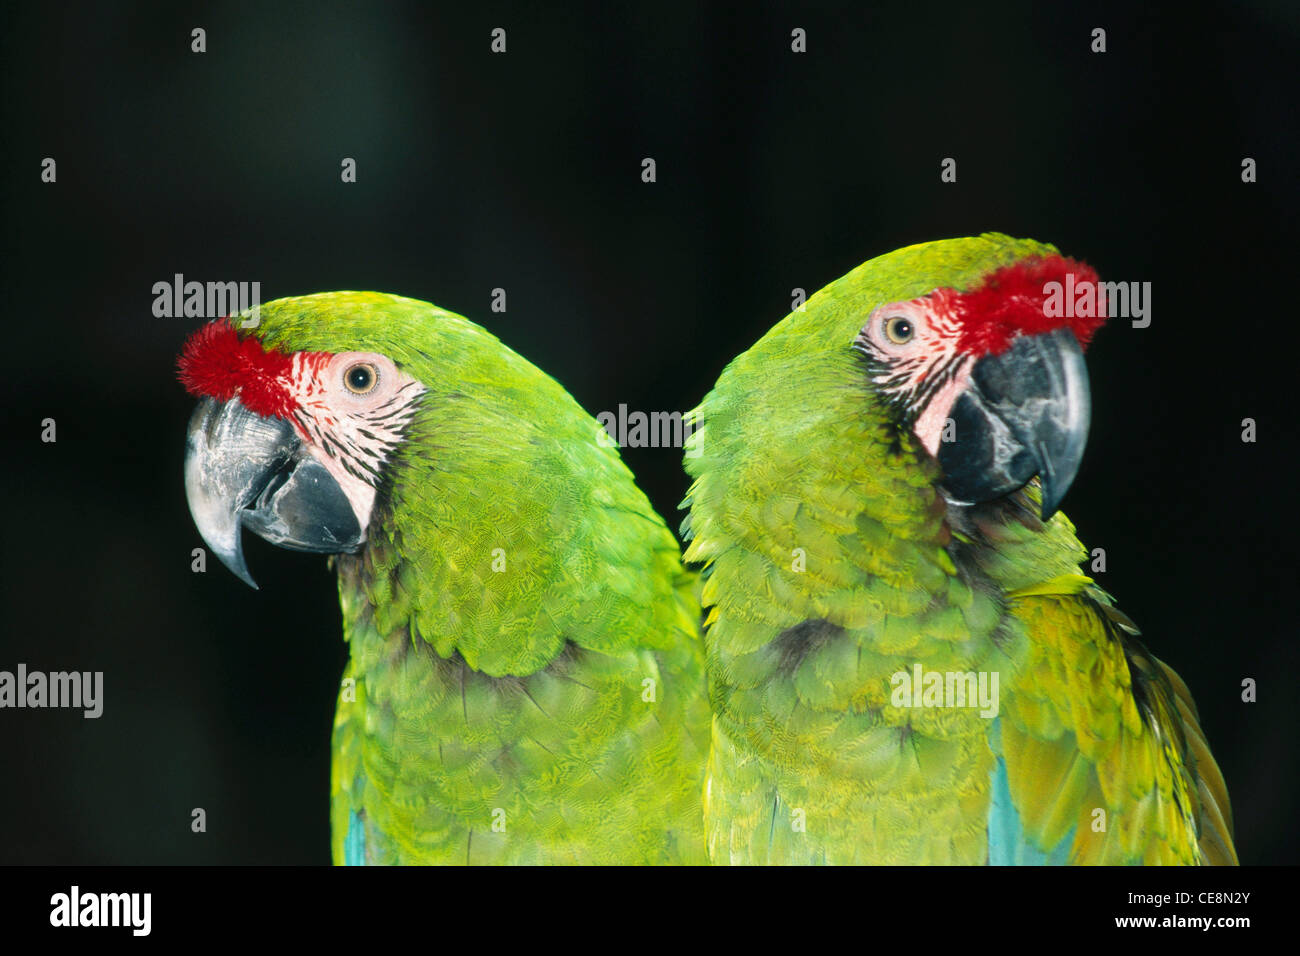 GCP 80049 : Birds two Parrots reverse duplicate twins xerox photocopy Stock Photo